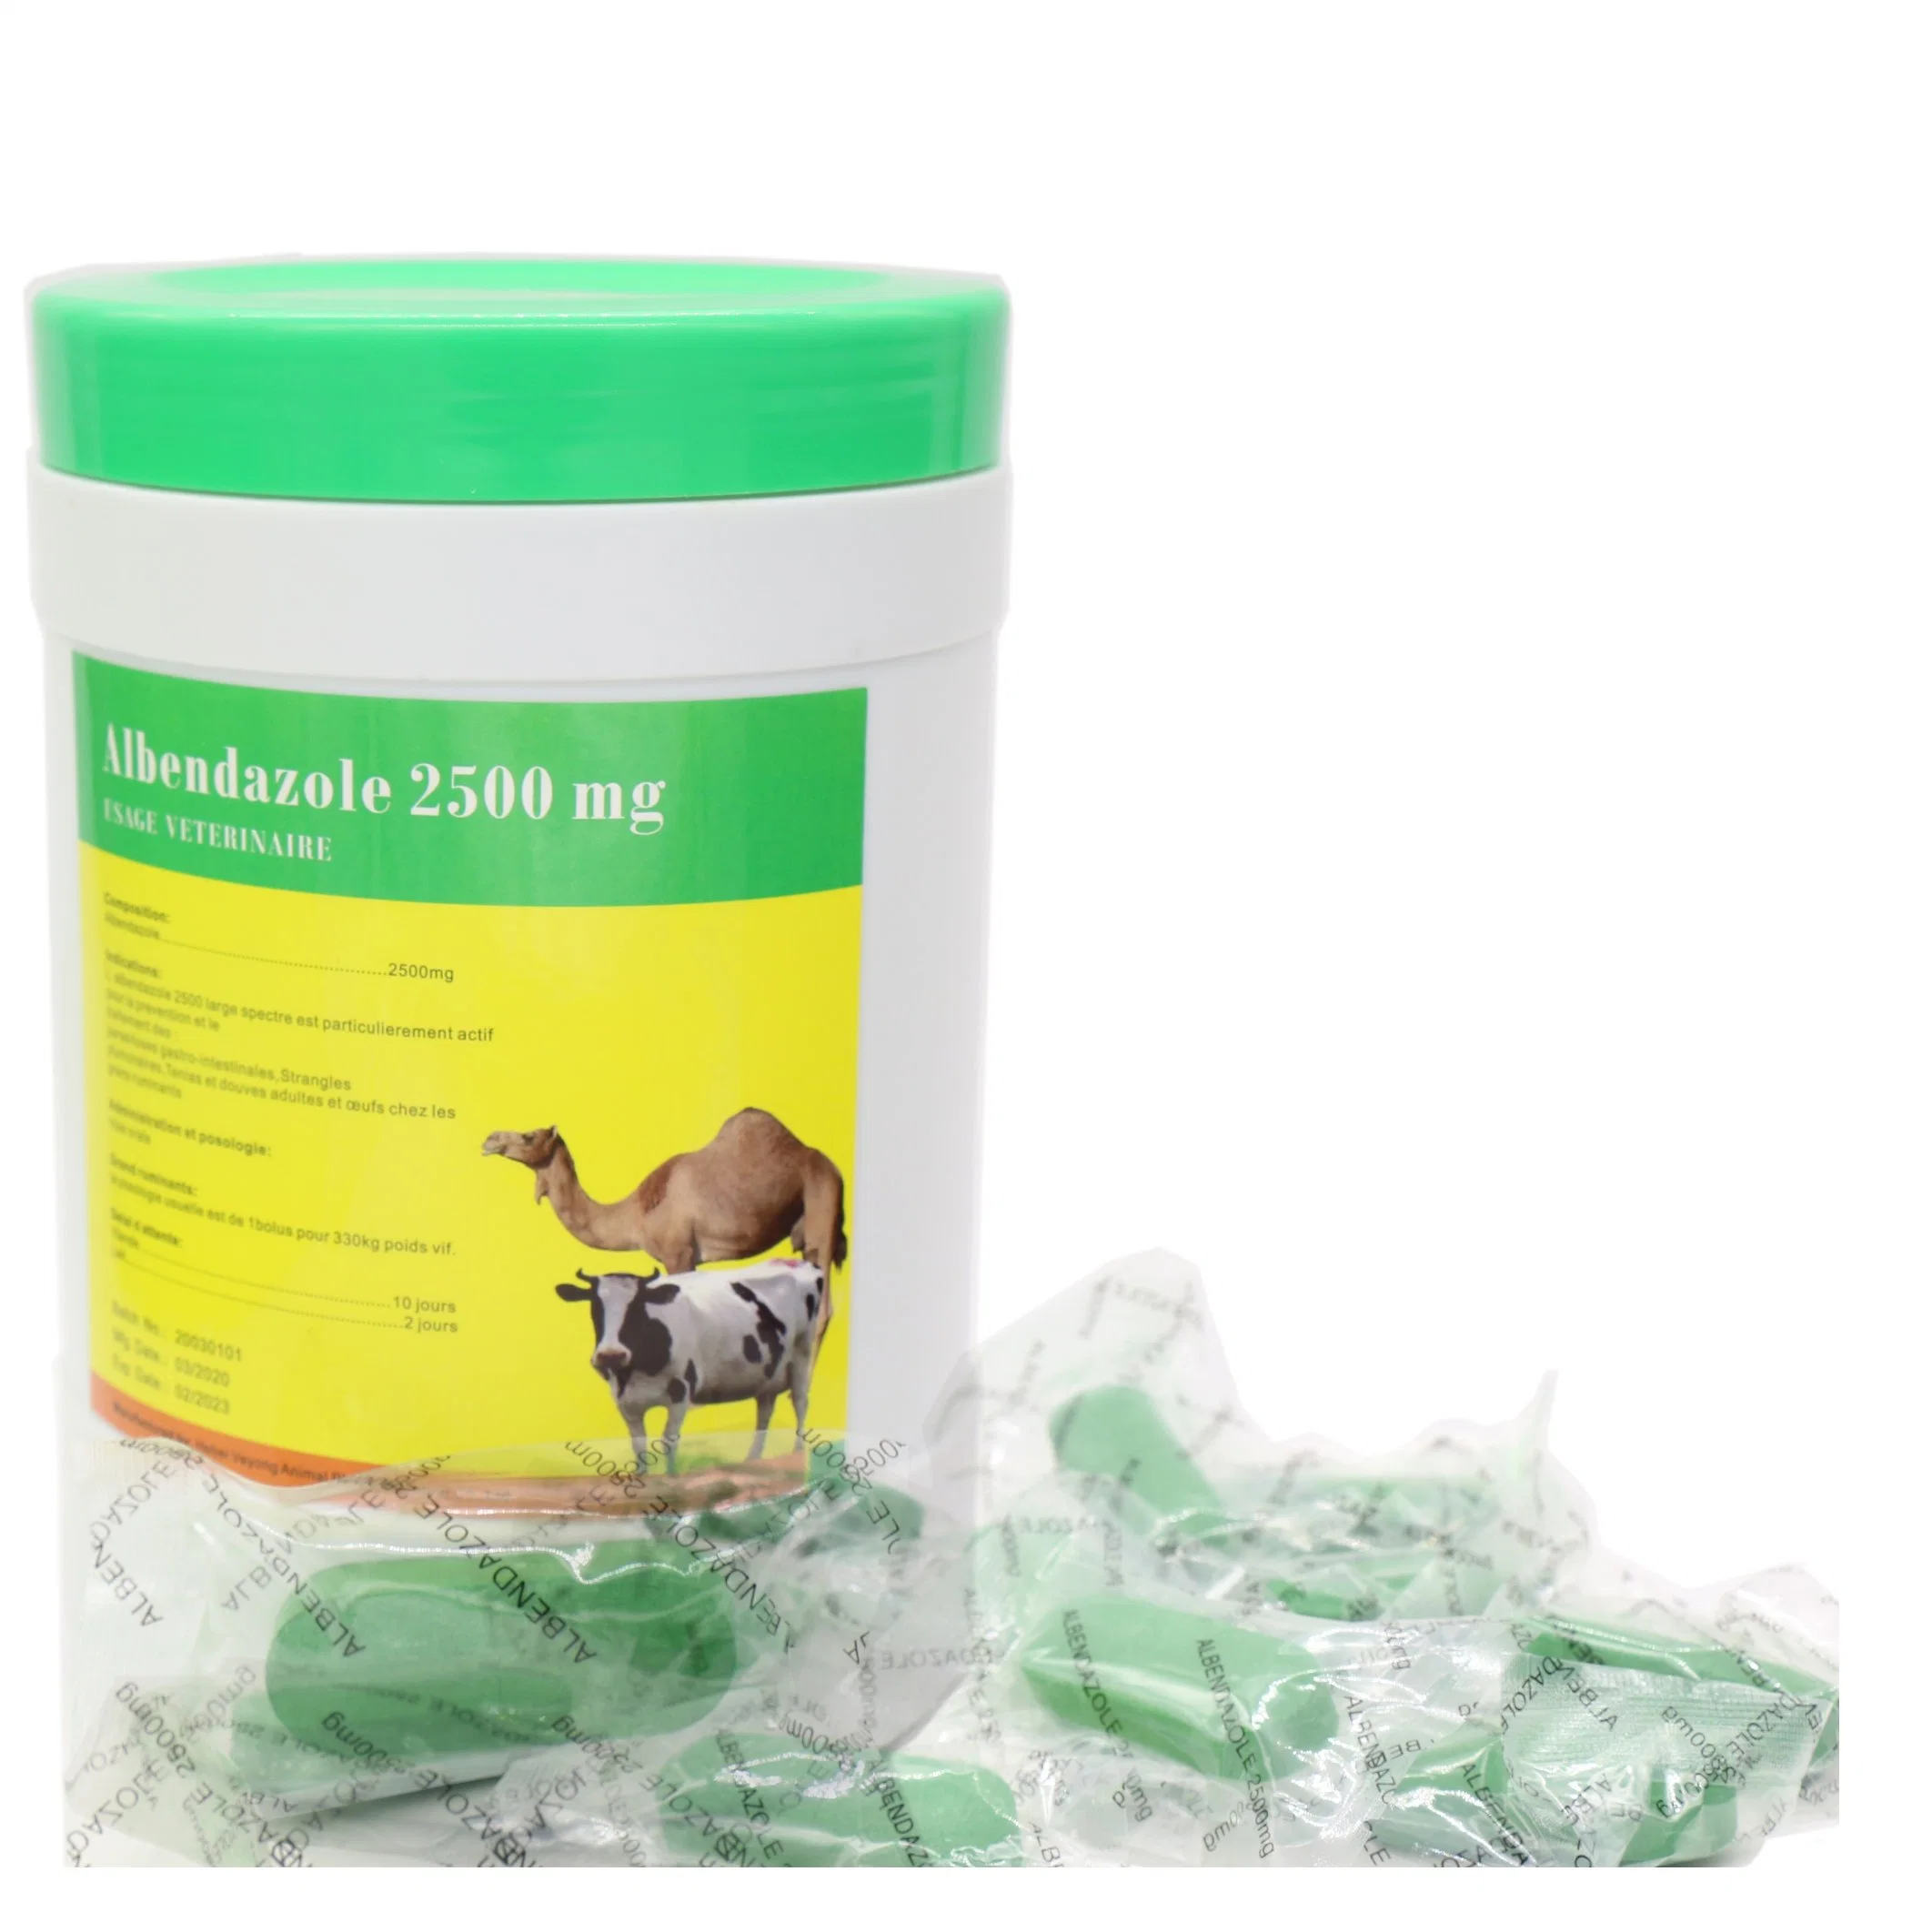 Veterinary Bolus Wholesale/Supplier Albendazole Bolus 300mg, 600mg, 2500mg for Animal Sheep Medicine